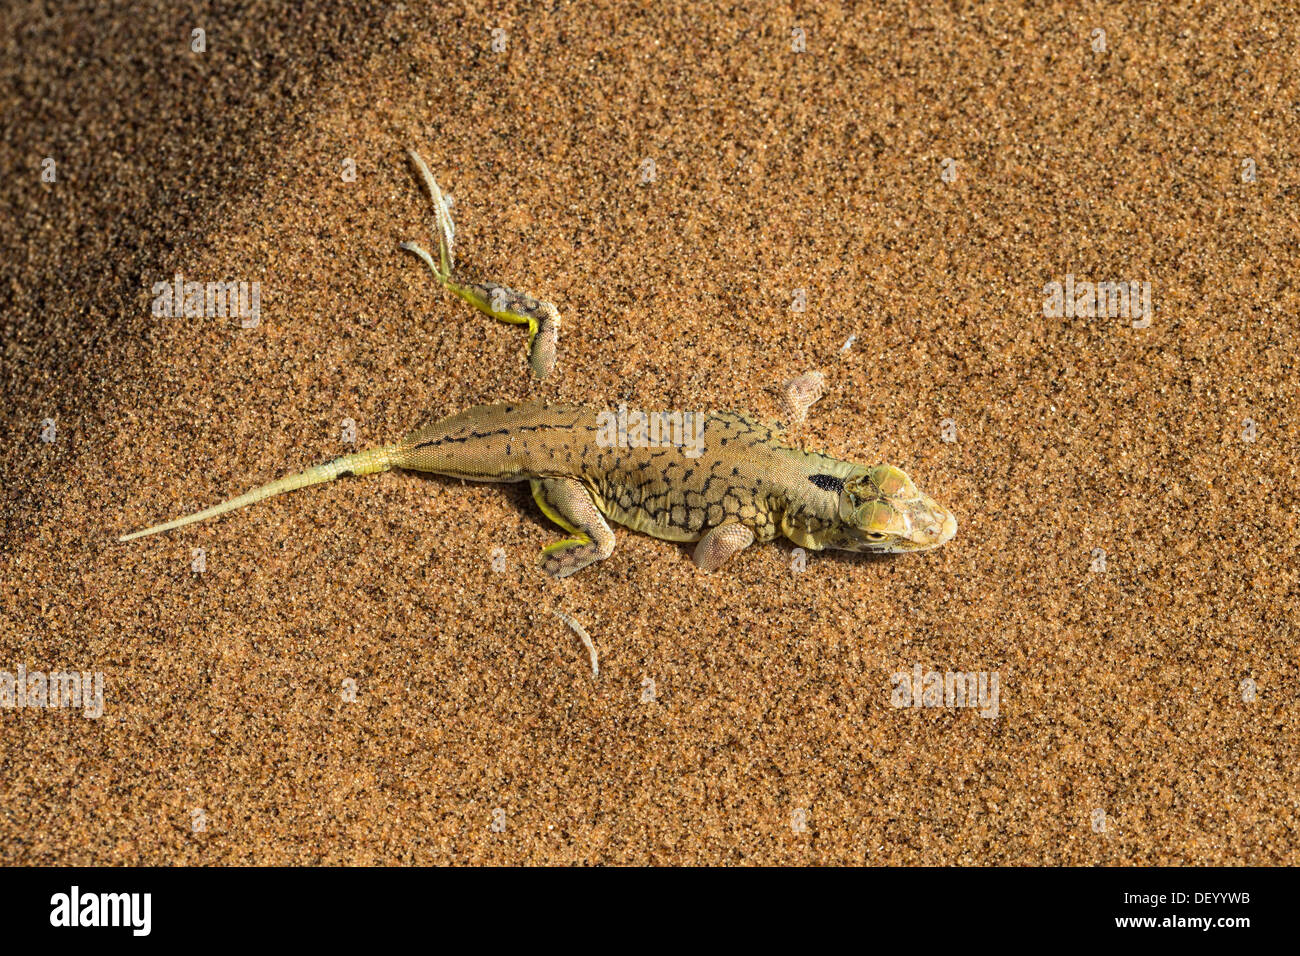 Shovel-snouted lizard (Meroles anchietae), Namib Desert, Namibia, April 2013 Stock Photo